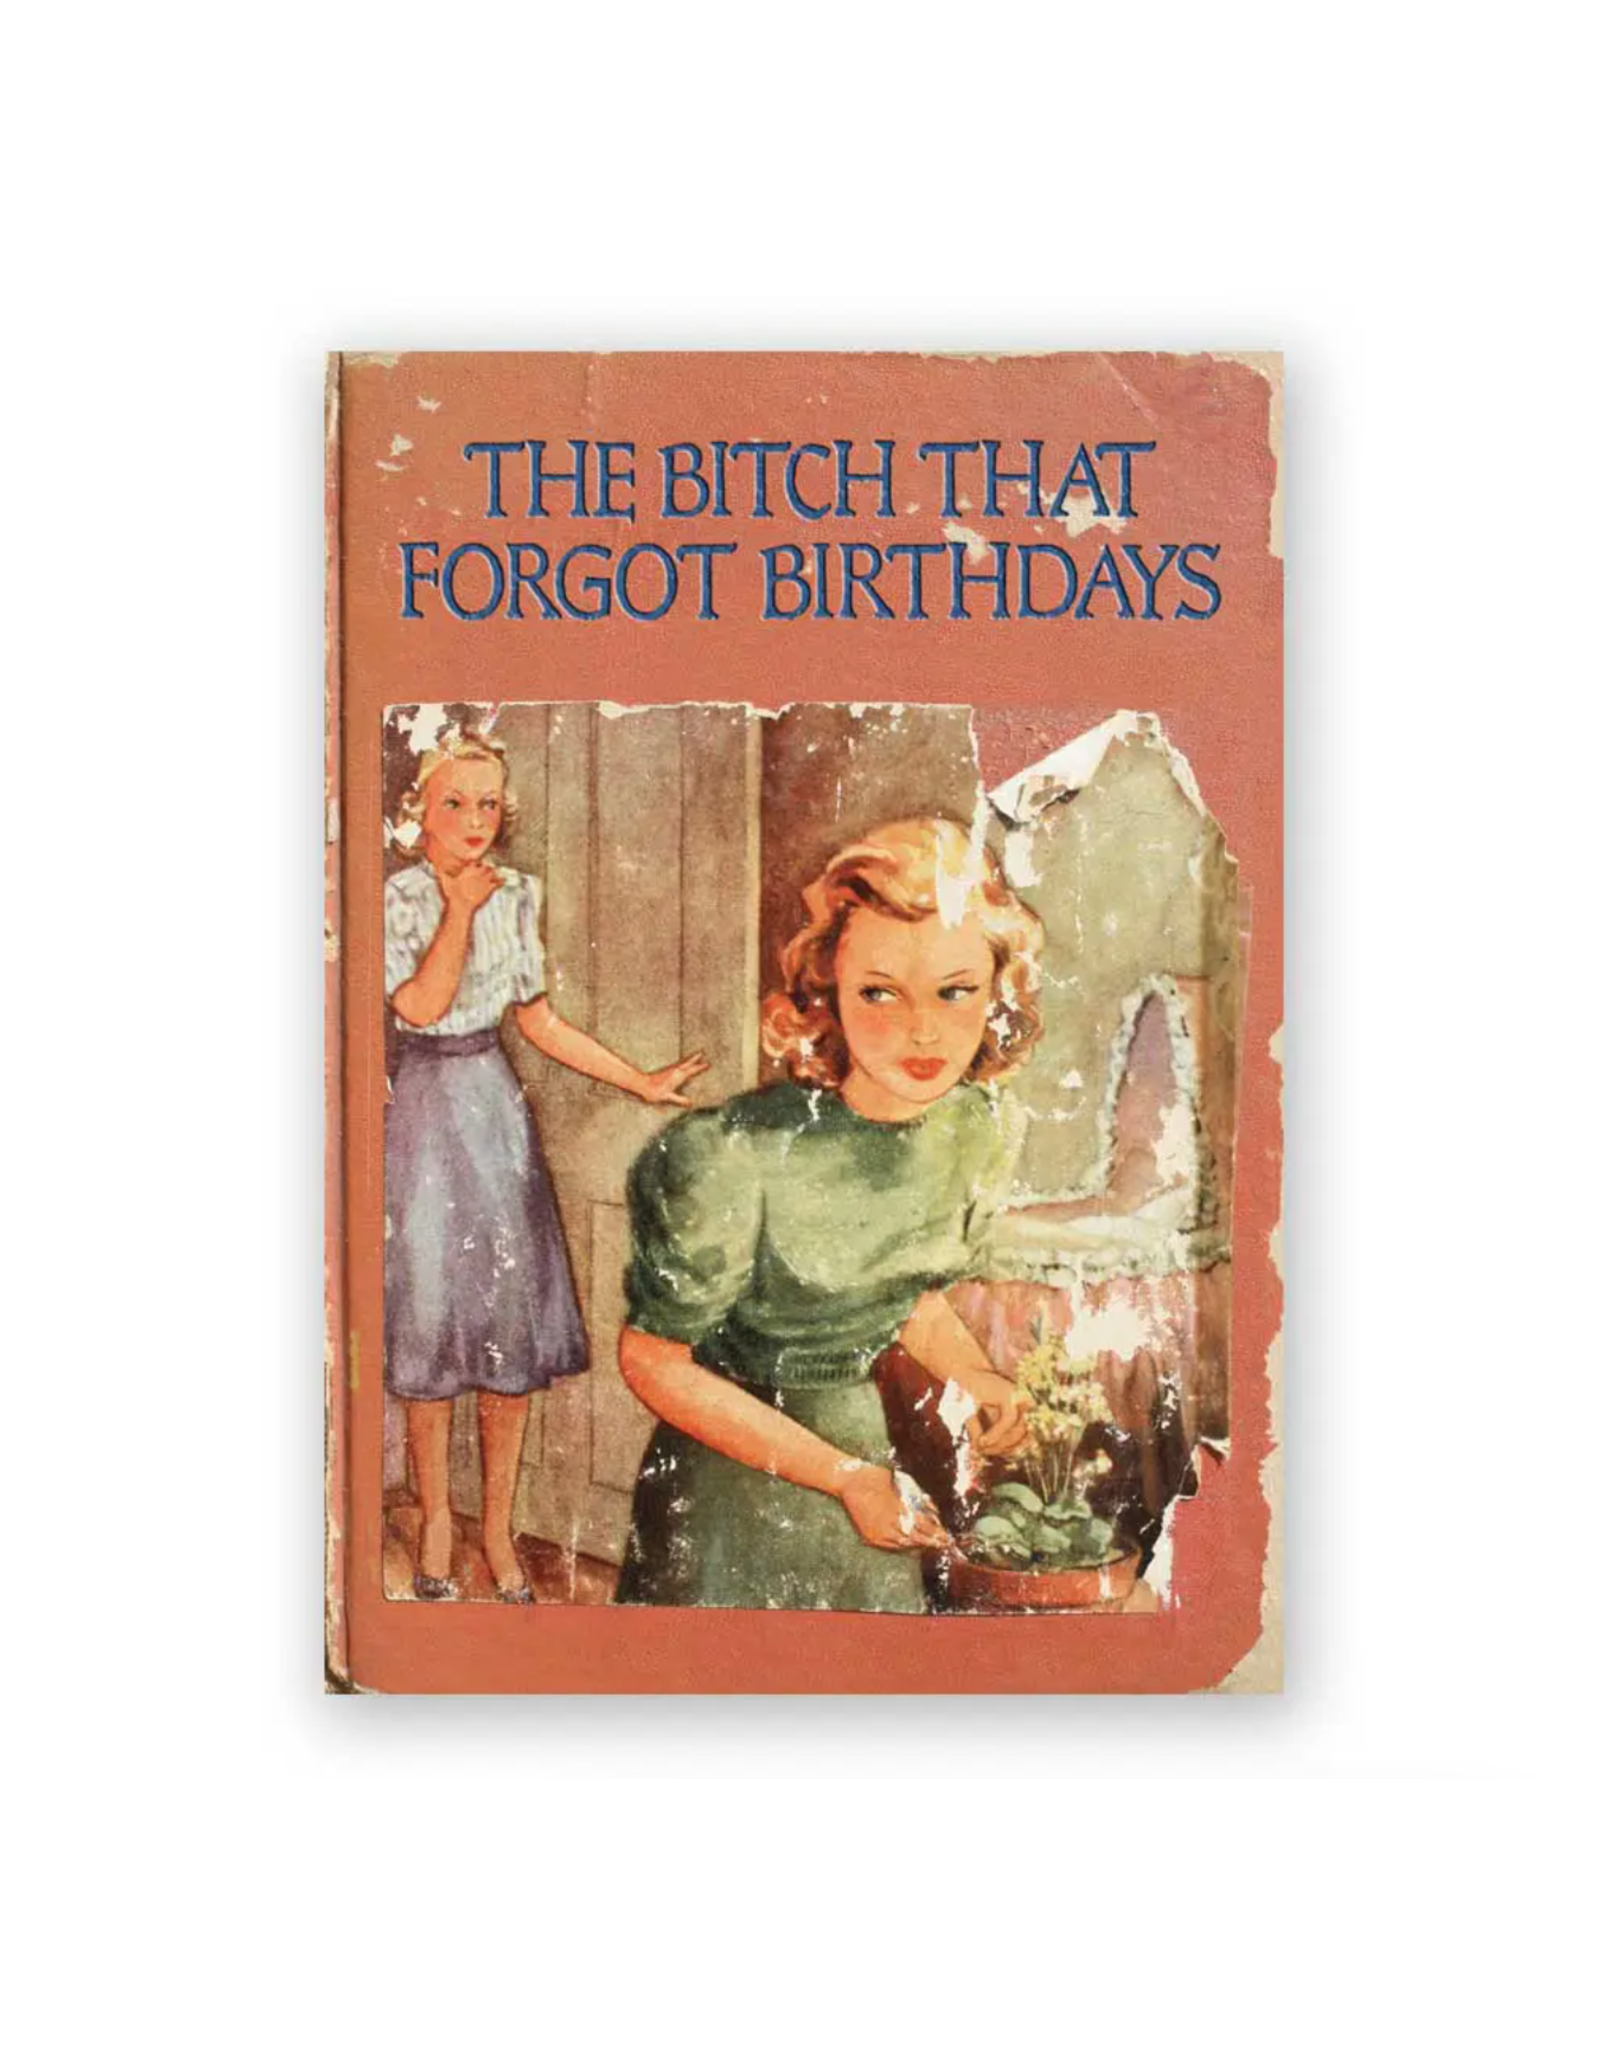 The Bitch That Forgot Birthdays Greeting Card